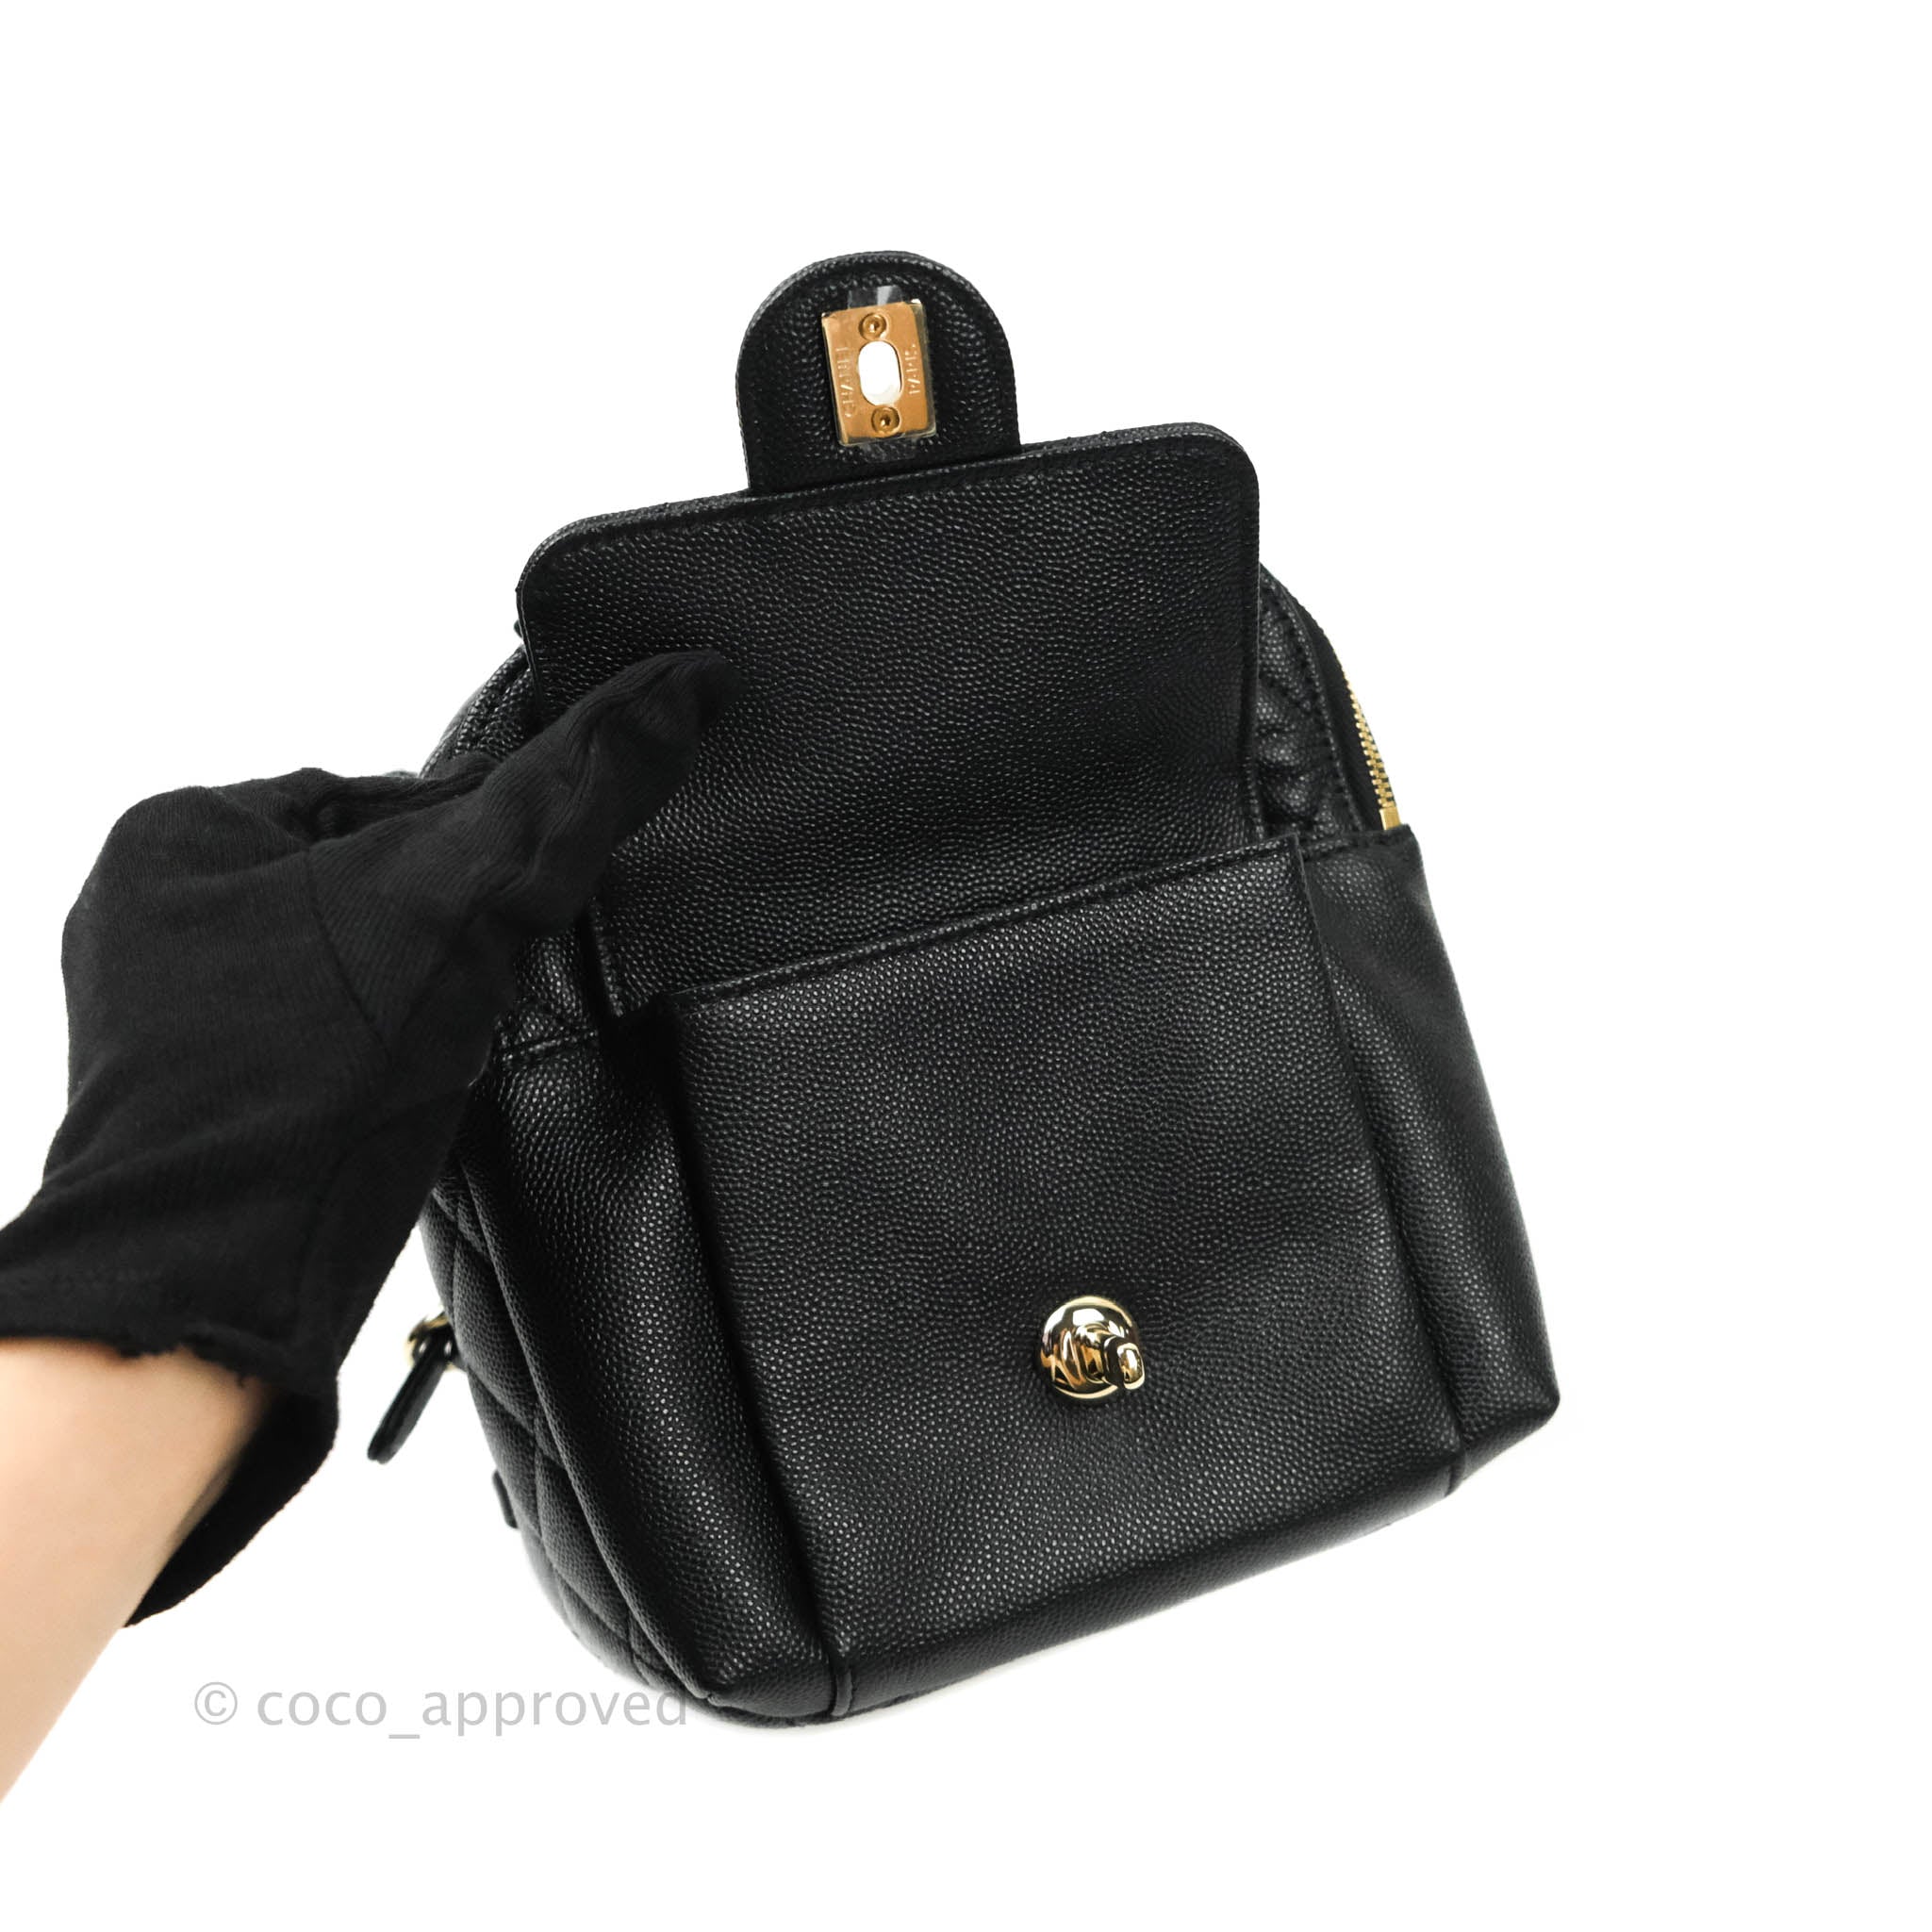 black chanel backpack purse